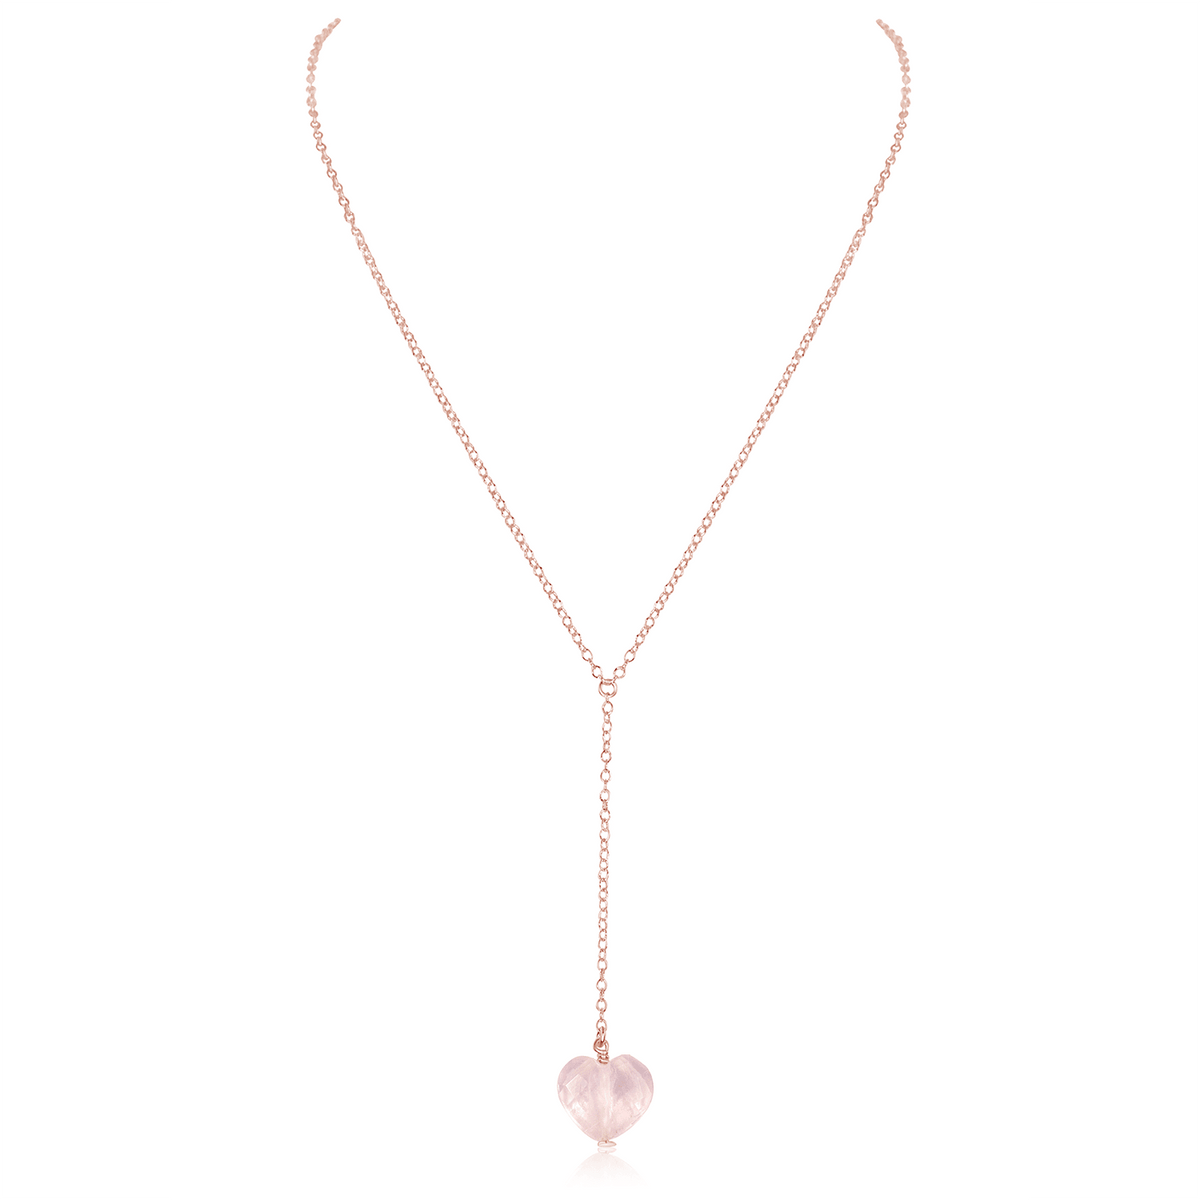 Rose Quartz Crystal Heart Lariat Necklace - Rose Quartz Crystal Heart Lariat Necklace - 14k Rose Gold Fill - Luna Tide Handmade Crystal Jewellery